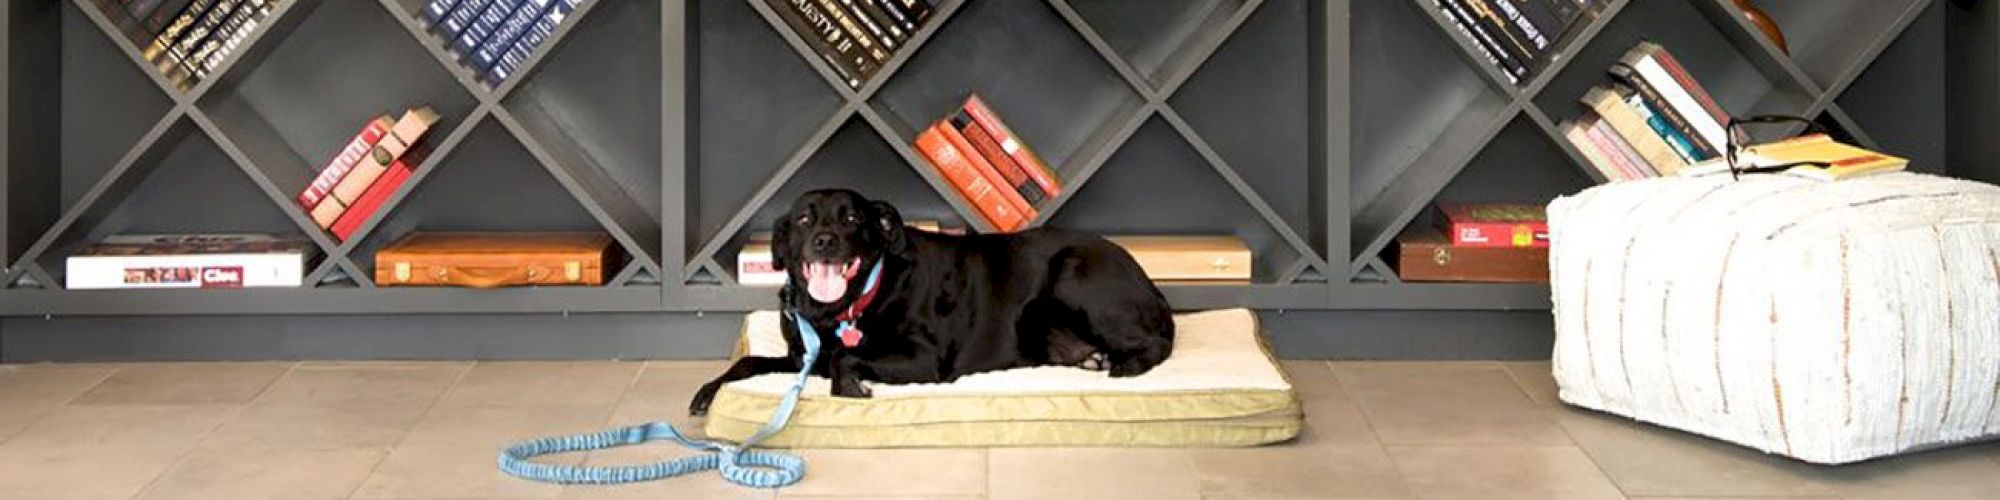 An organized grid bookshelf houses various books and decor items. At the bottom, a black dog lies on a cushion near a white pouf.